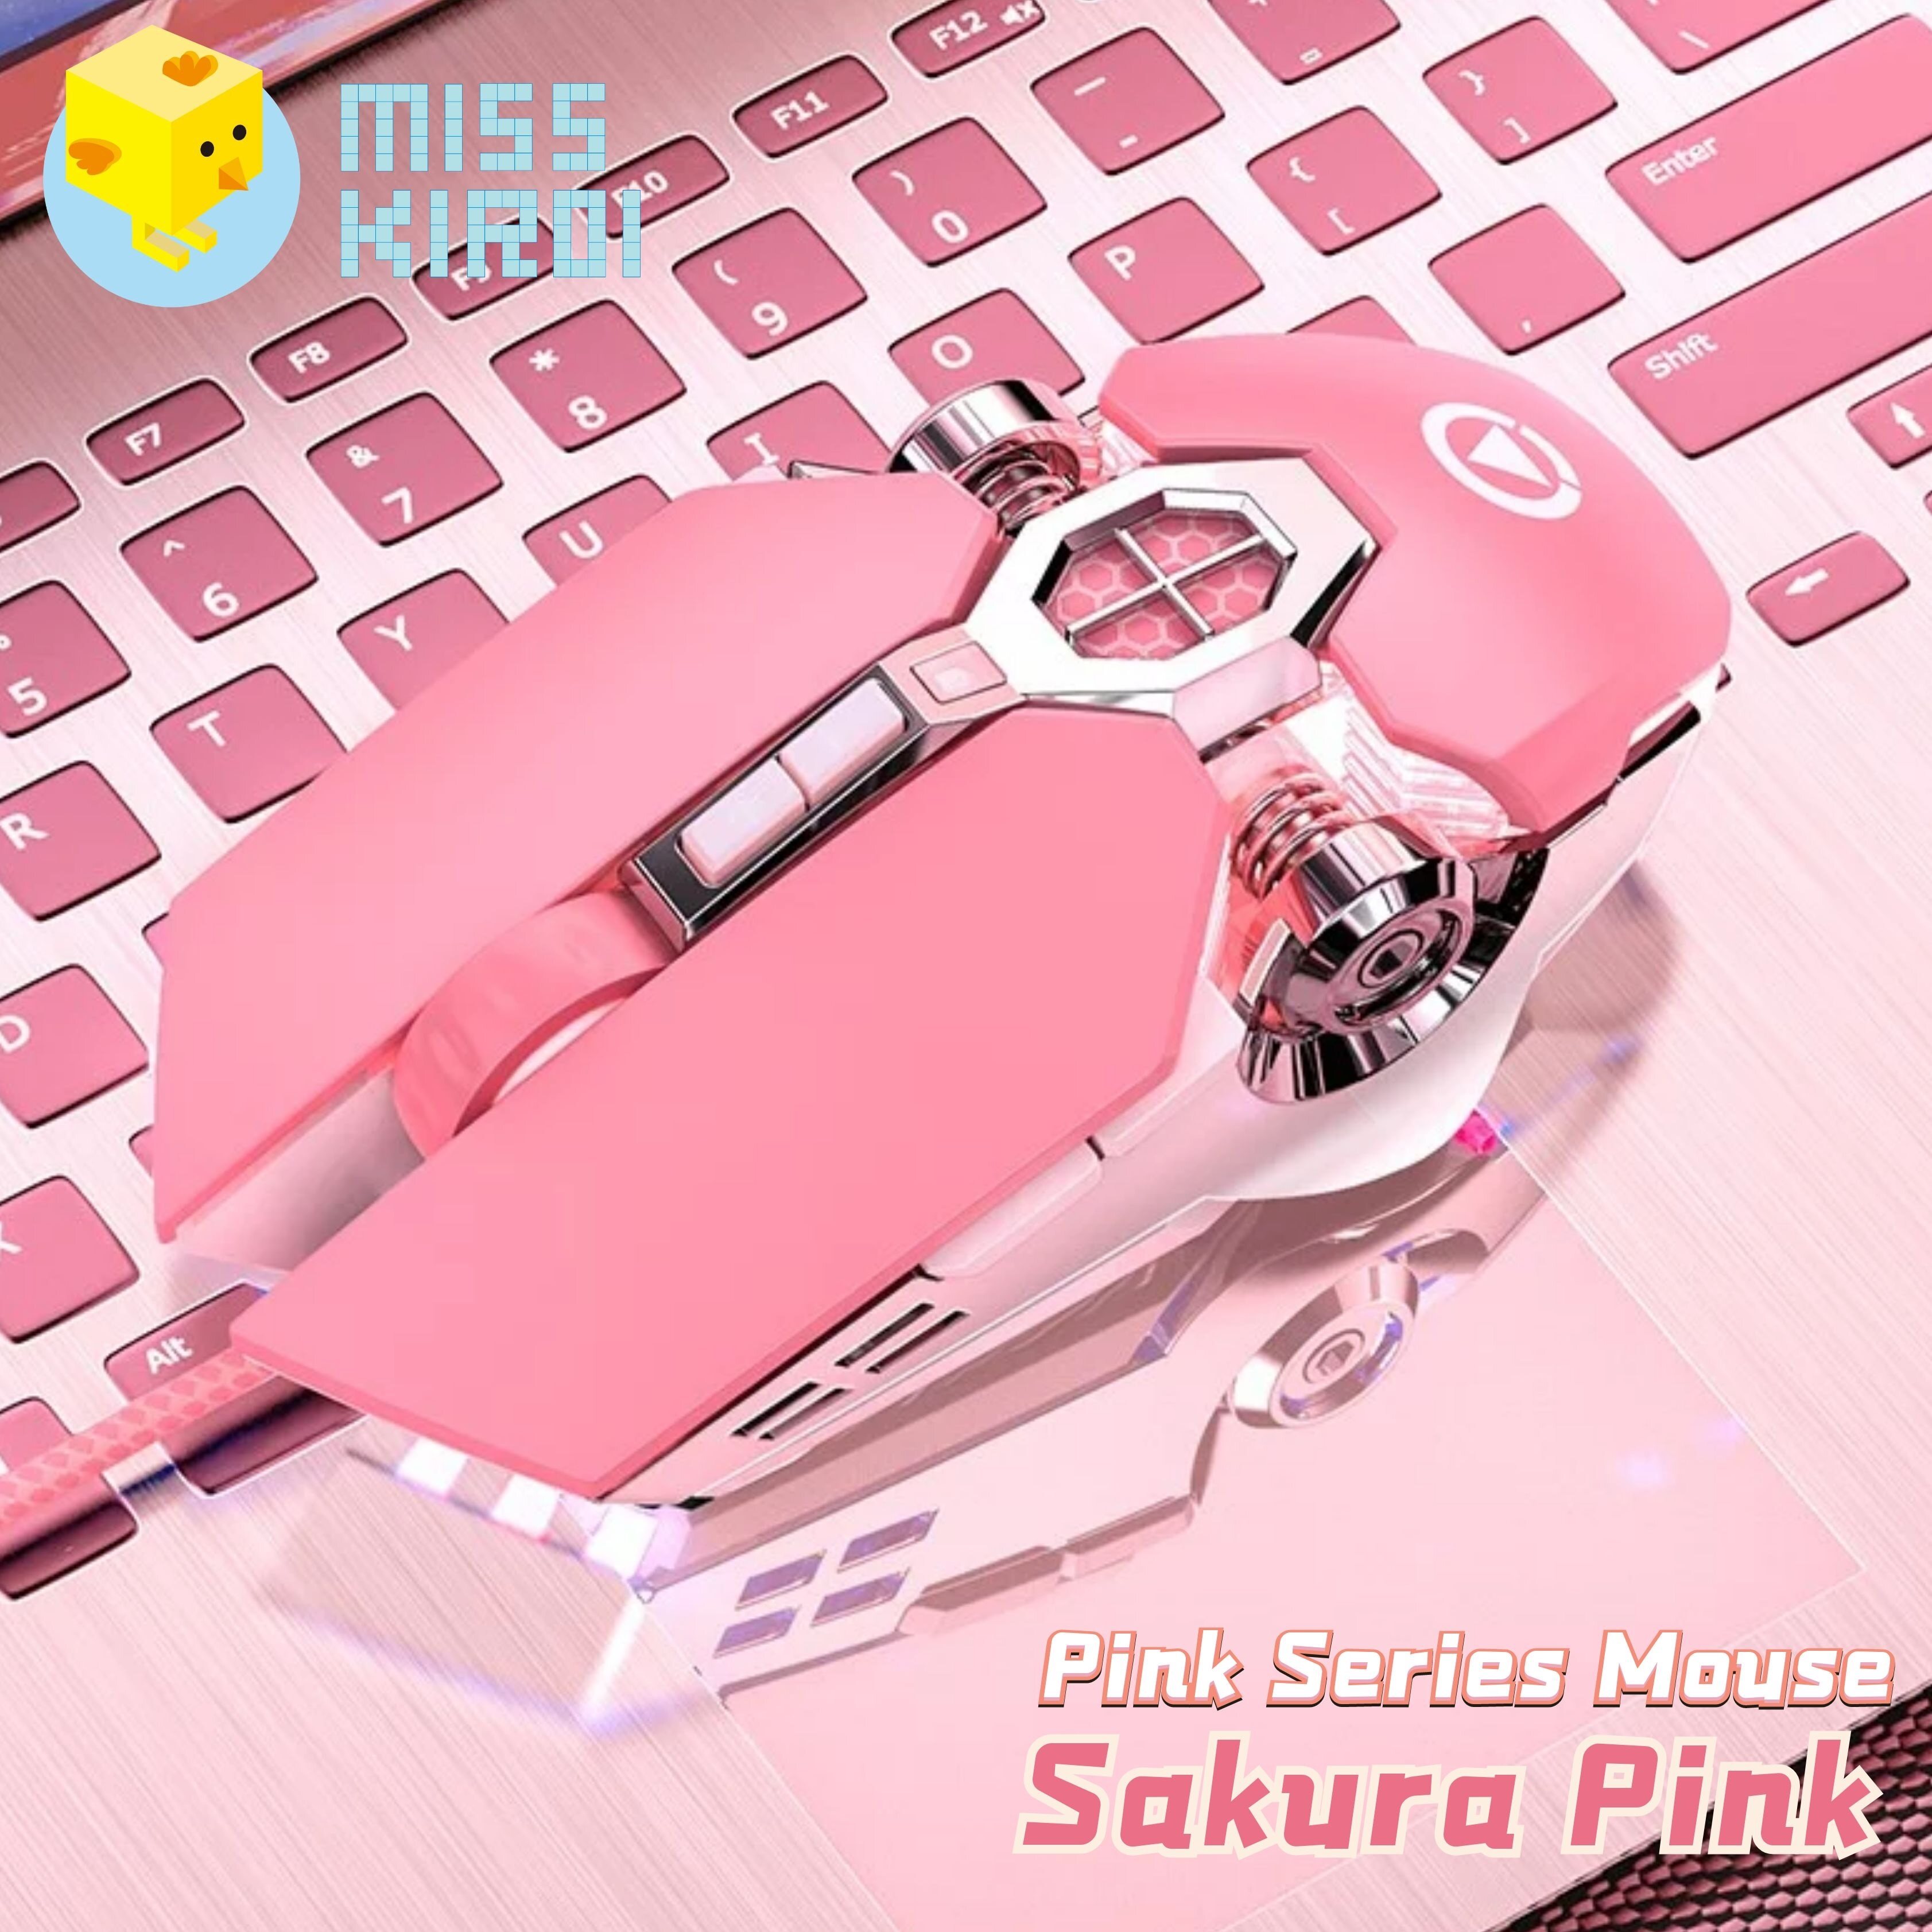 [PINK SERIES] Model Sakura Pink G3OS Optical Macro Key Office Gaming Mouse เมาส์เกมมิ่ง ออฟติคอล ตั้งมาโครคีย์ได้ ความแม่นยำสูงปรับ DPI 800 - 3200 เหมาะกับเกม MMORPG (BNS) FPS MoBA เกมคอมพิวเตอร์เดสก์ท็อปแบบมีสายเงียบเงียบ เม้าส์ esports